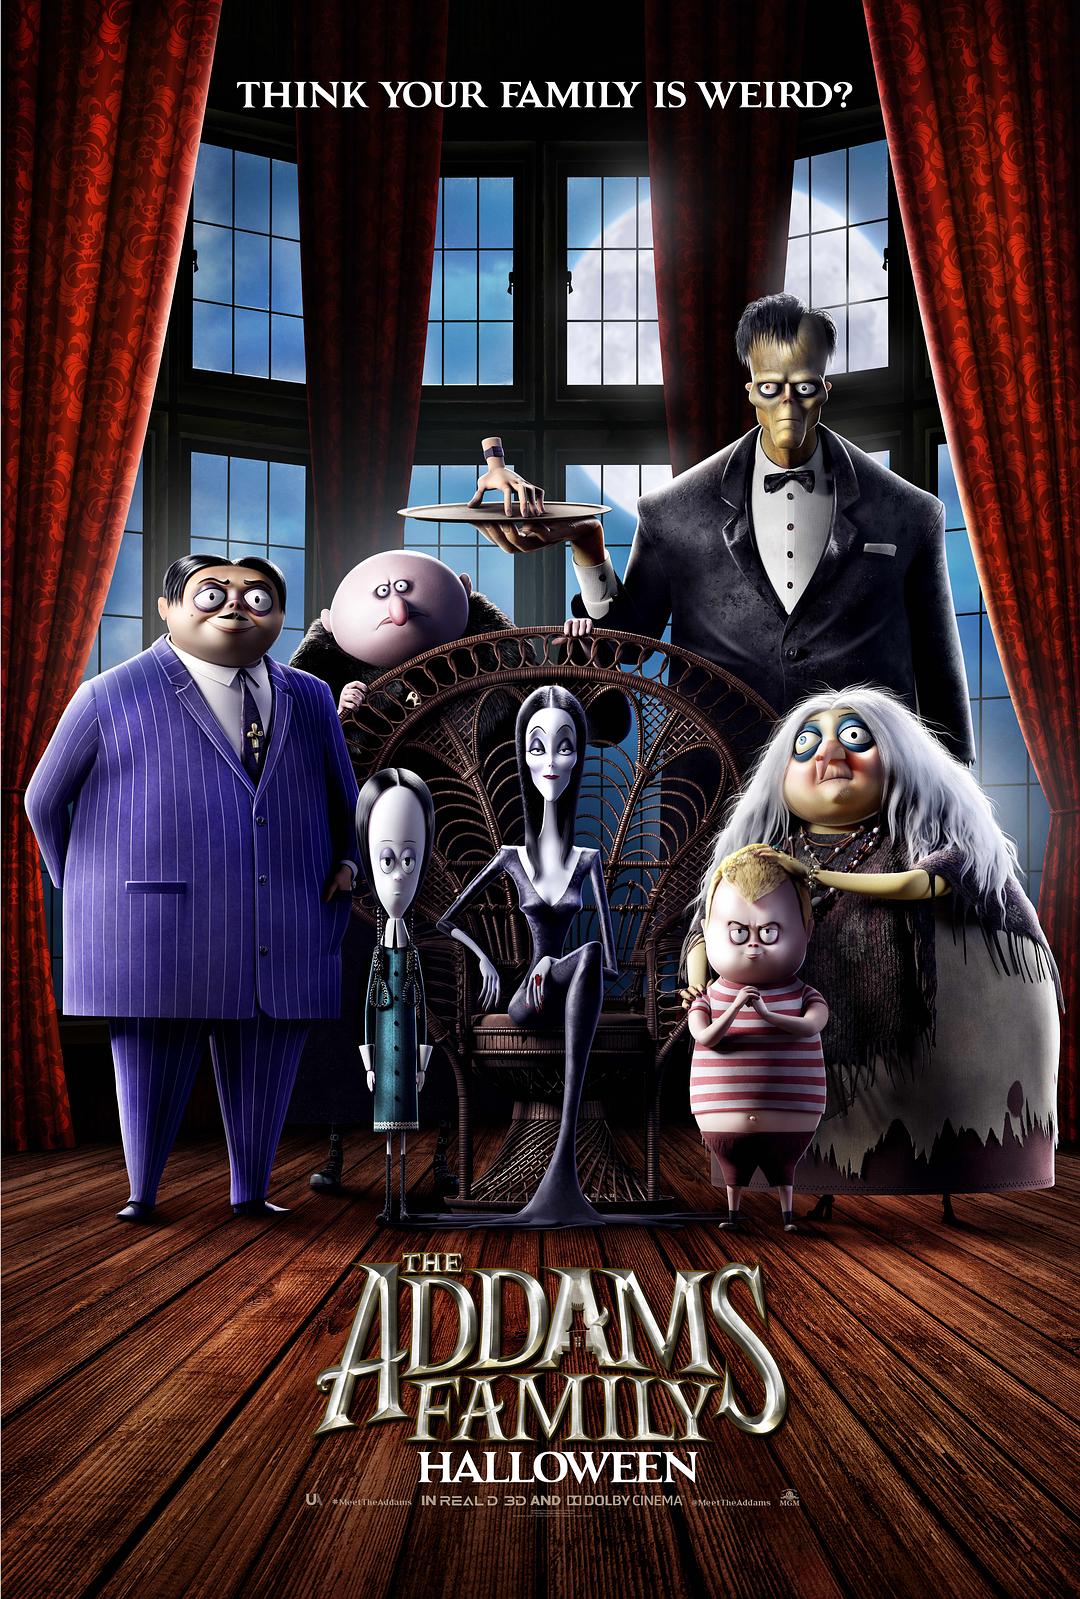 亚当斯一家/爱登士家庭 The.Addams.Family.2019.1080p.BluRay.REMUX.AVC.DTS-HD.MA.7.1-FGT 22.32GB-1.png